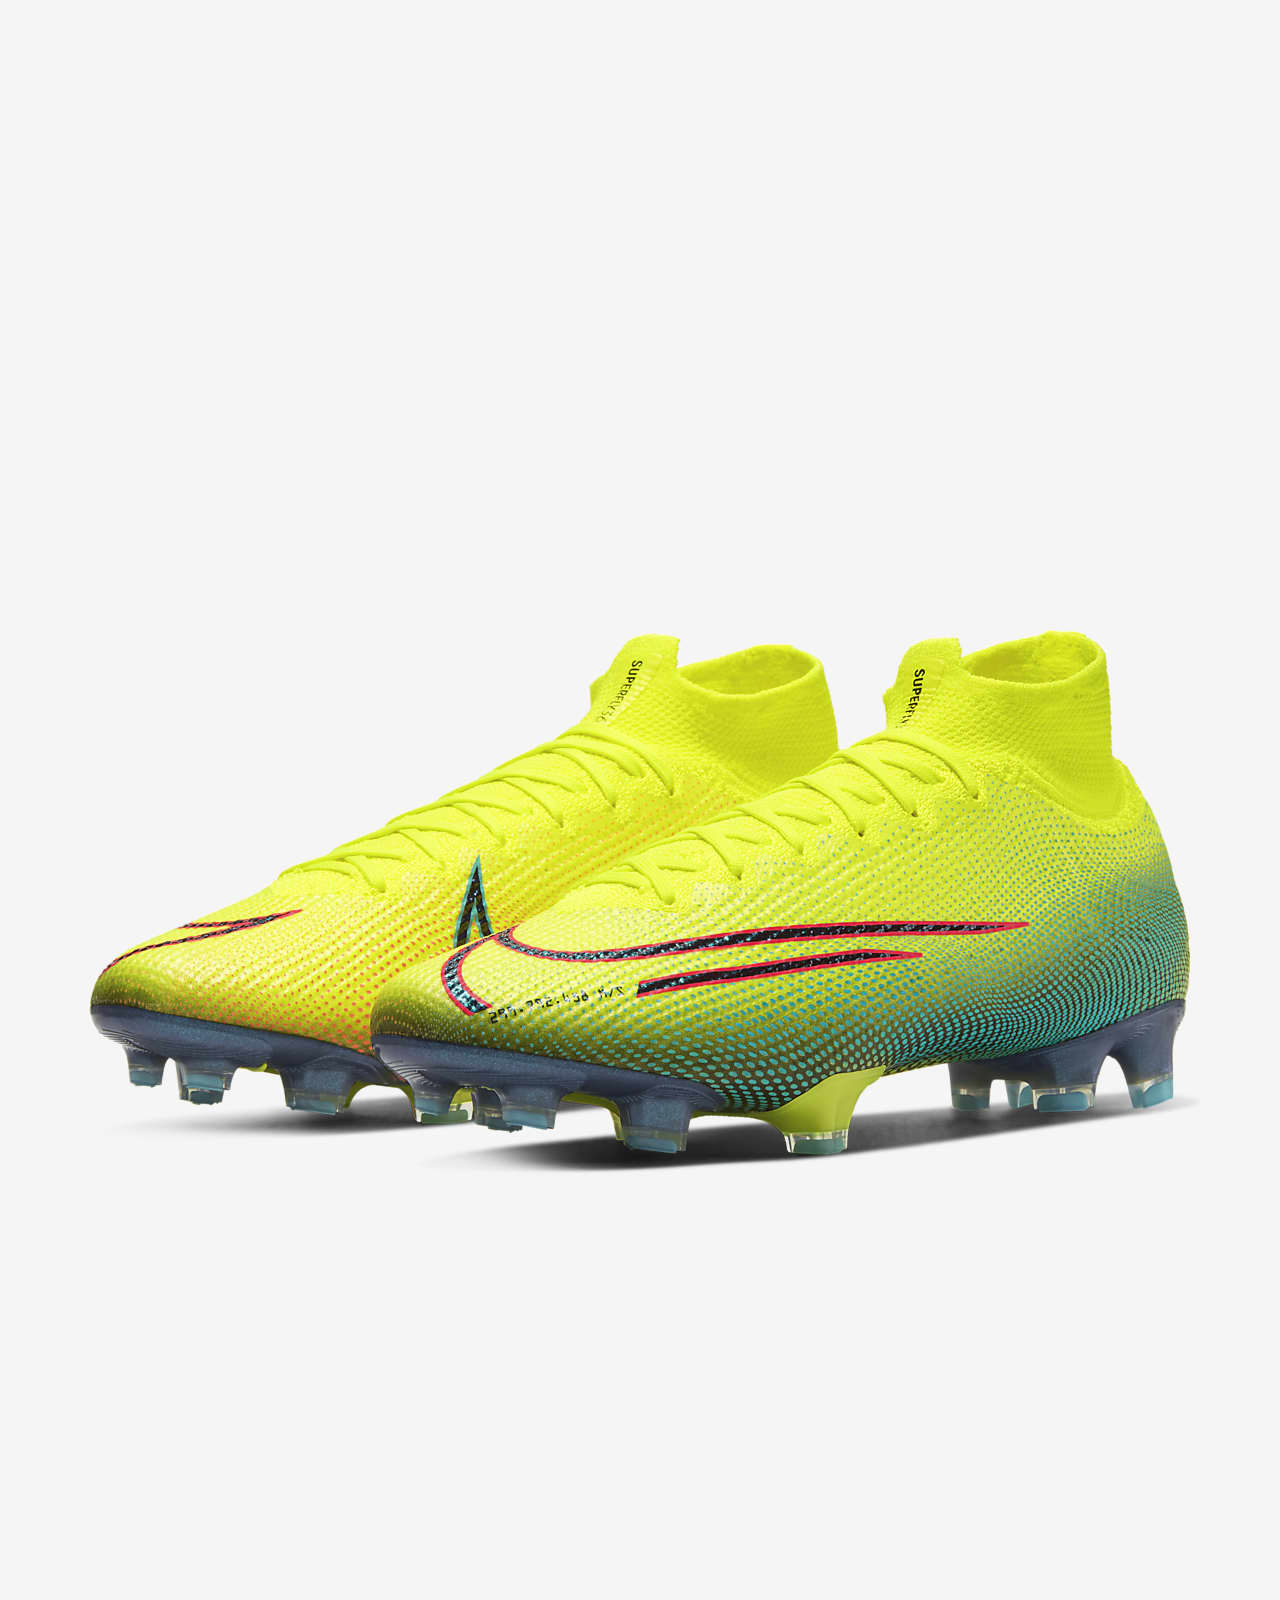 boots nike dream league soccer